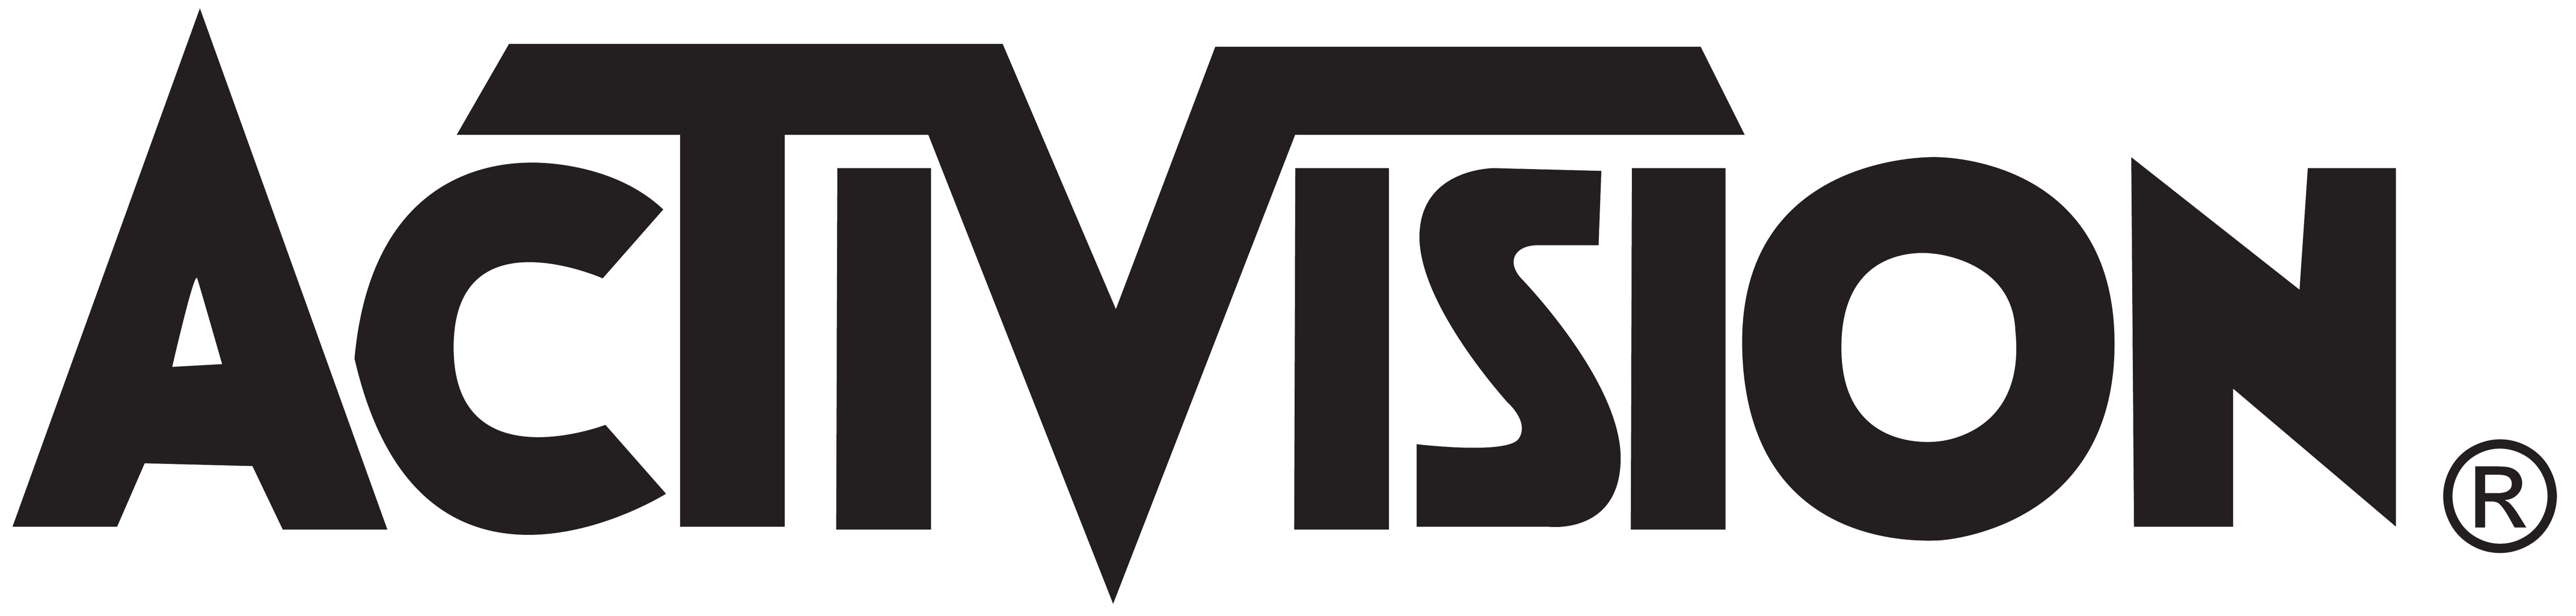 Logo Activision PNG - 97372